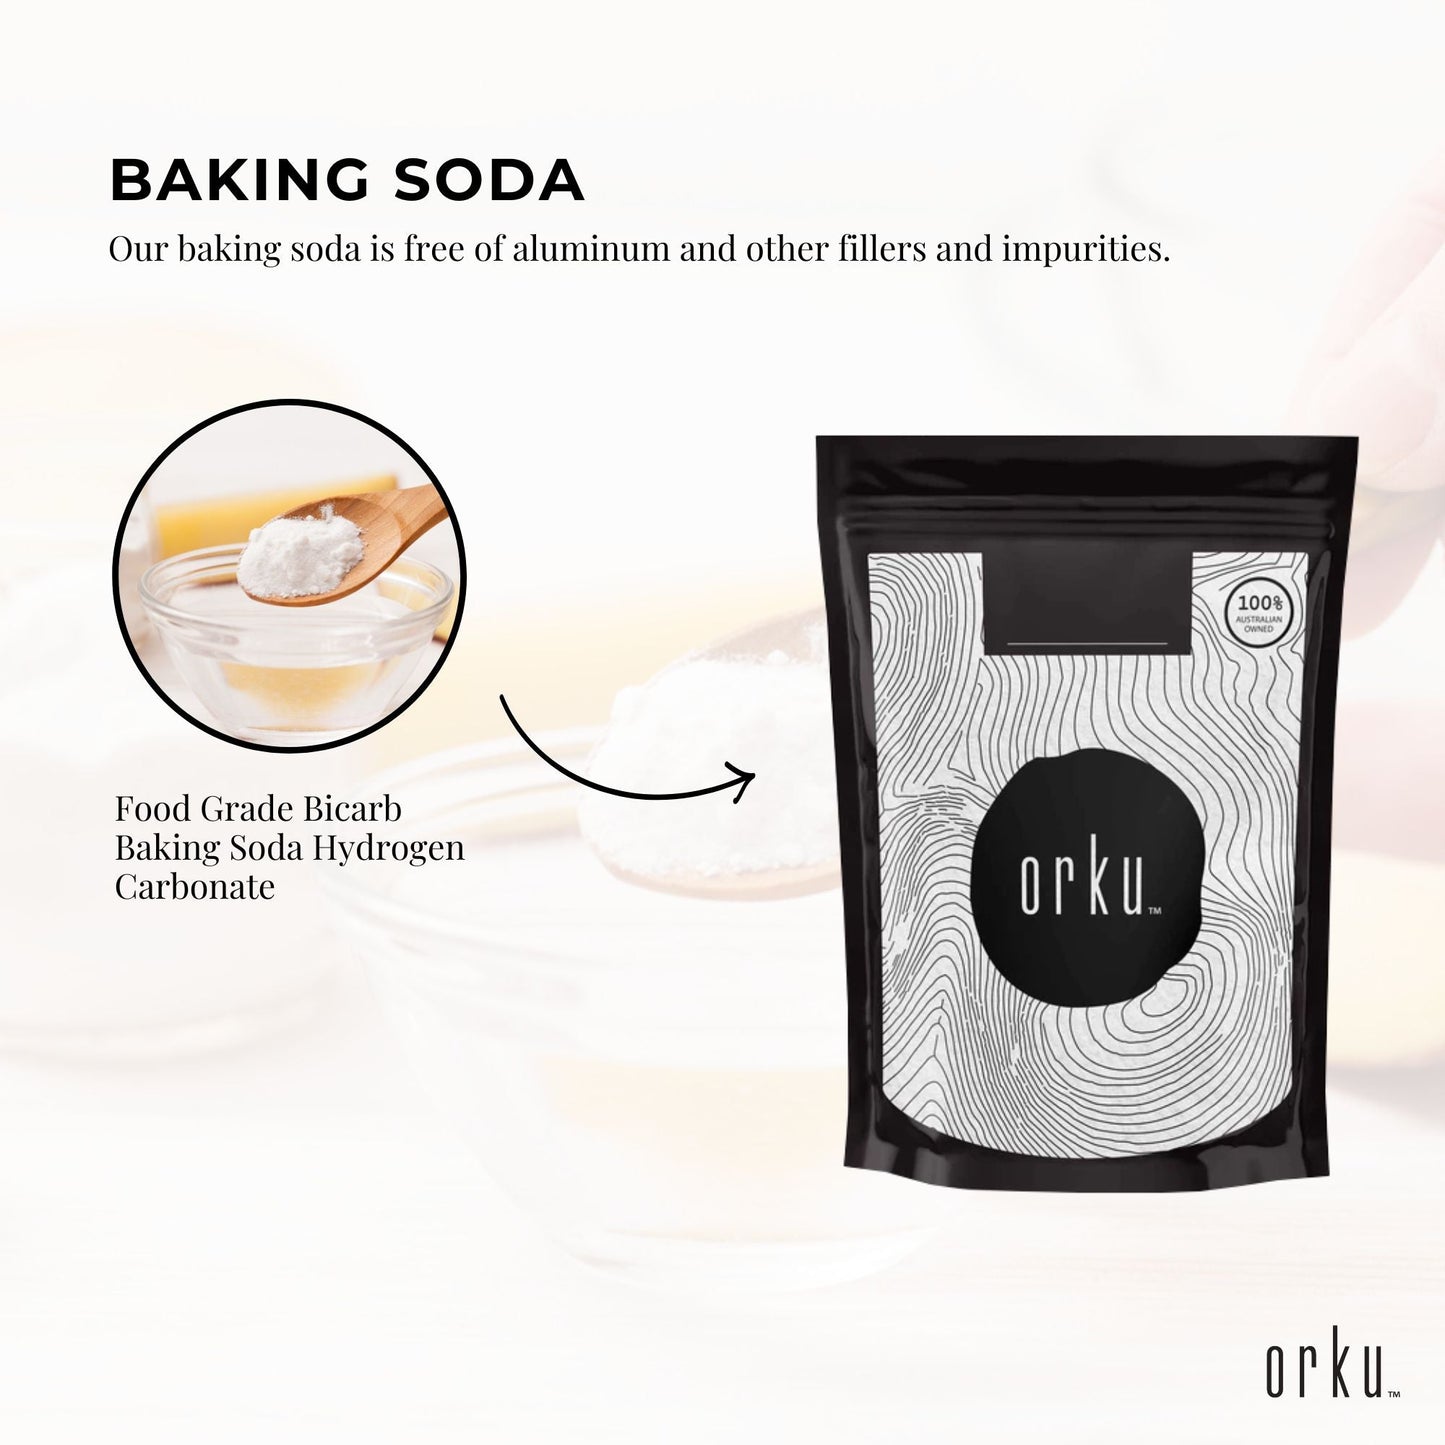 1Kg Sodium Bicarbonate - Food Grade Bicarb Baking Soda Hydrogen Carbonate Powder